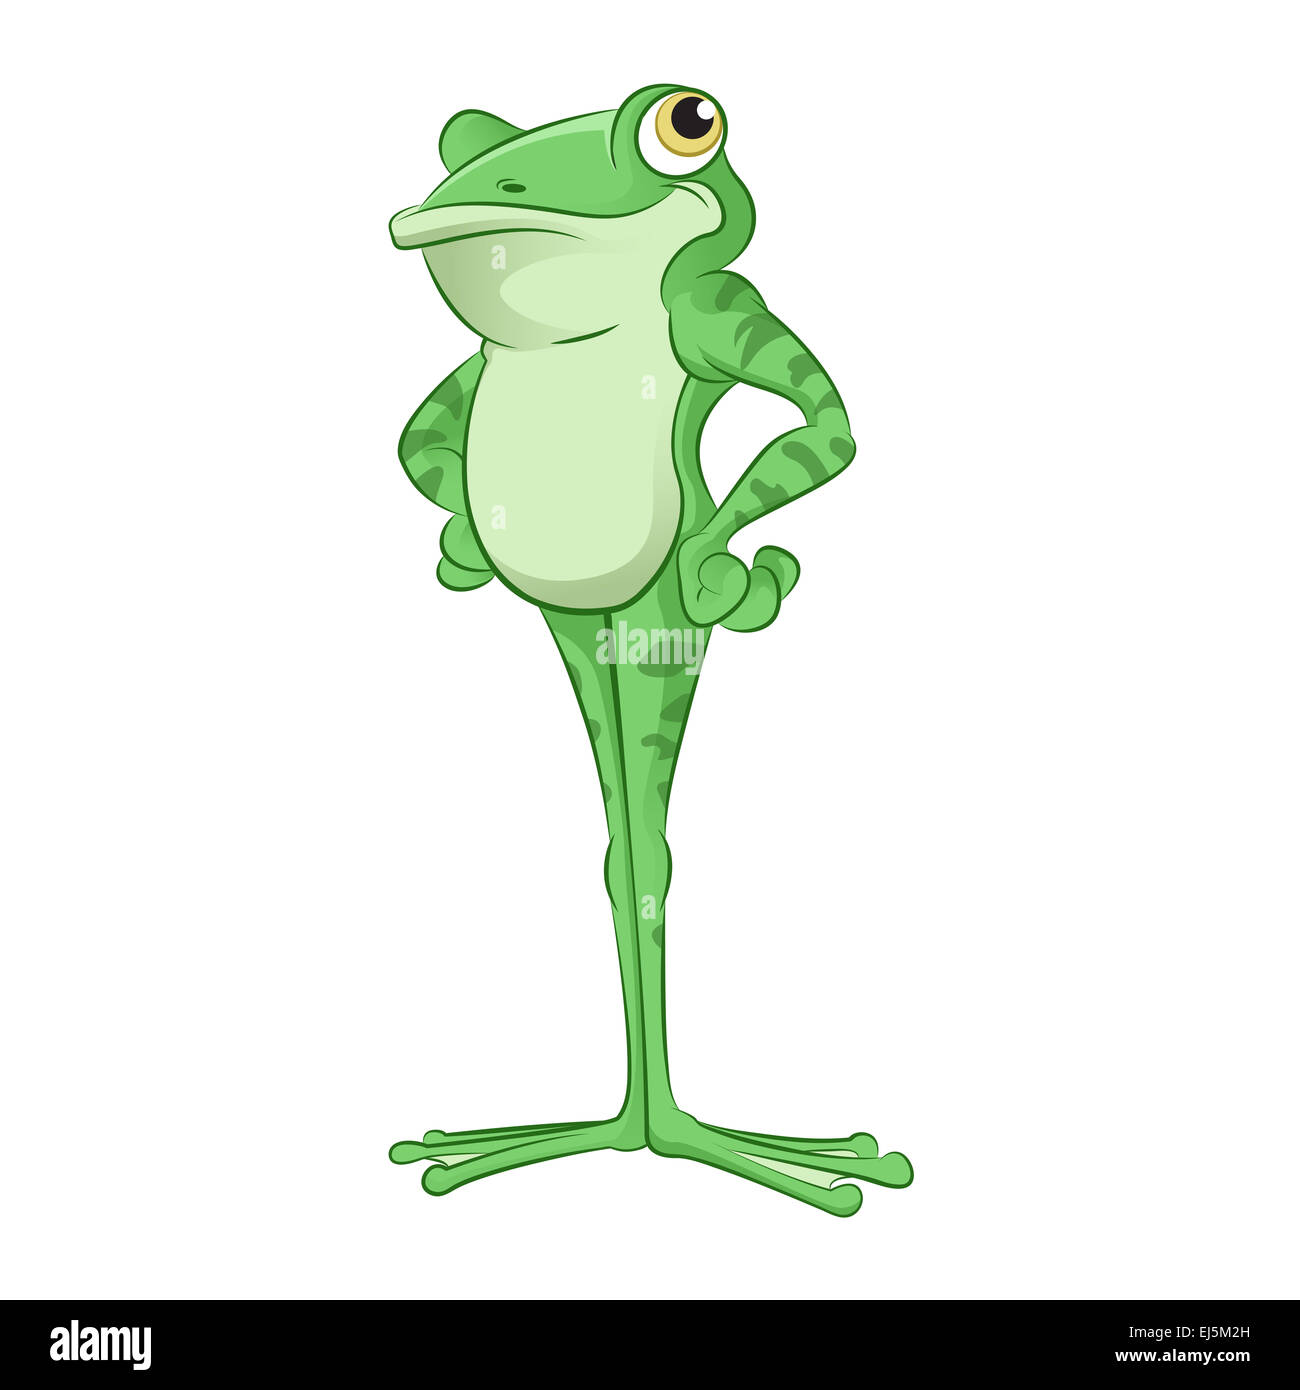 Vector image of an green Cartoon Frog Stock Photo